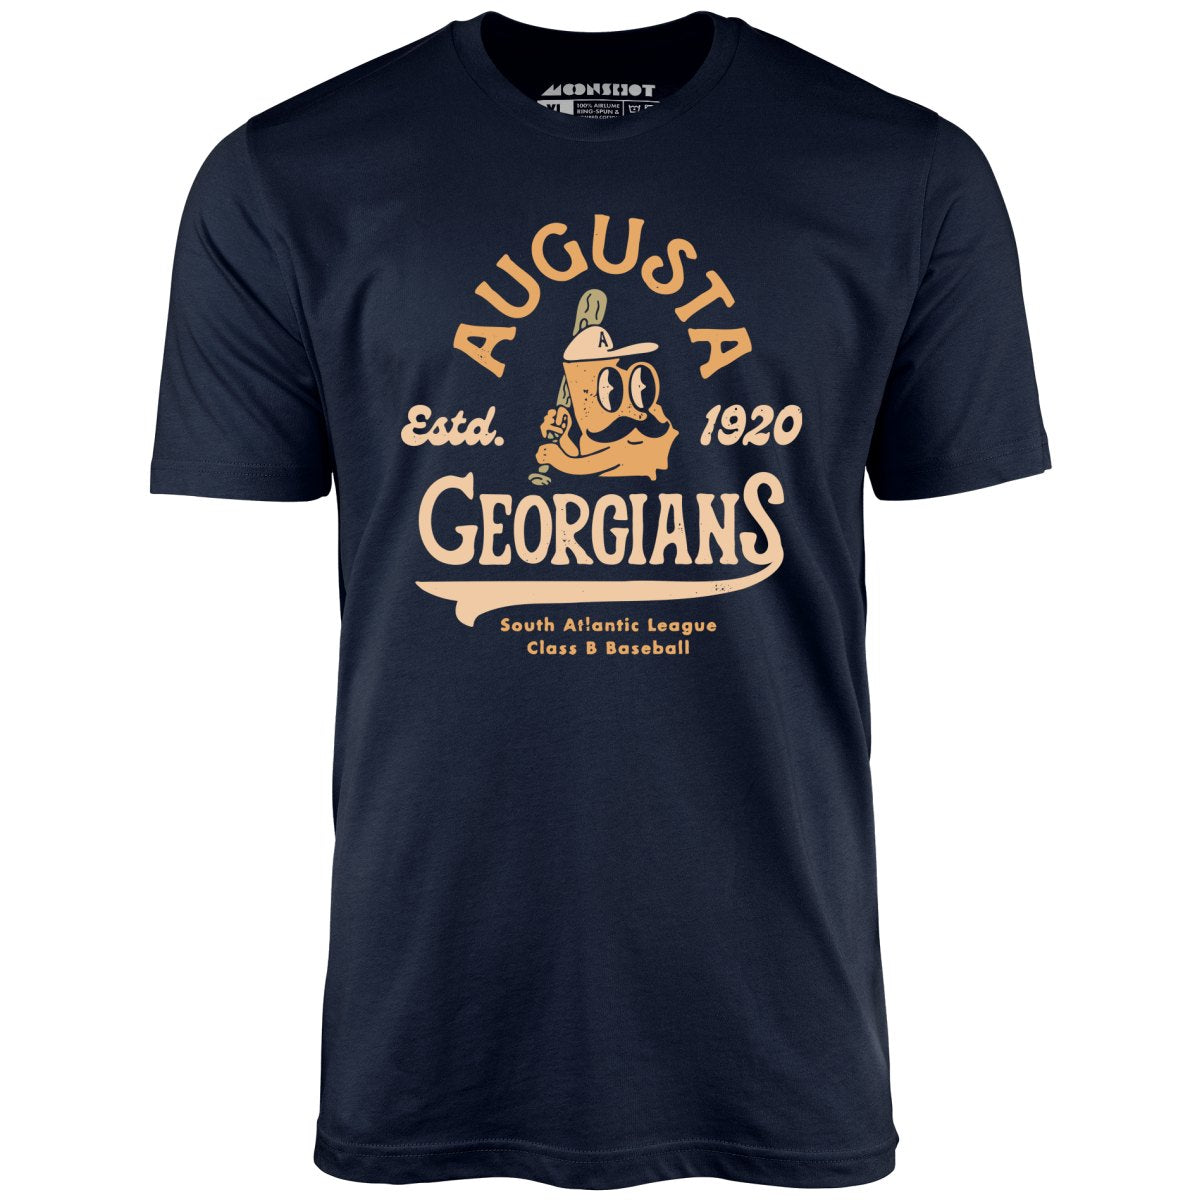 Augusta Georgians - Georgia - Vintage Defunct Baseball Teams - Unisex T-Shirt